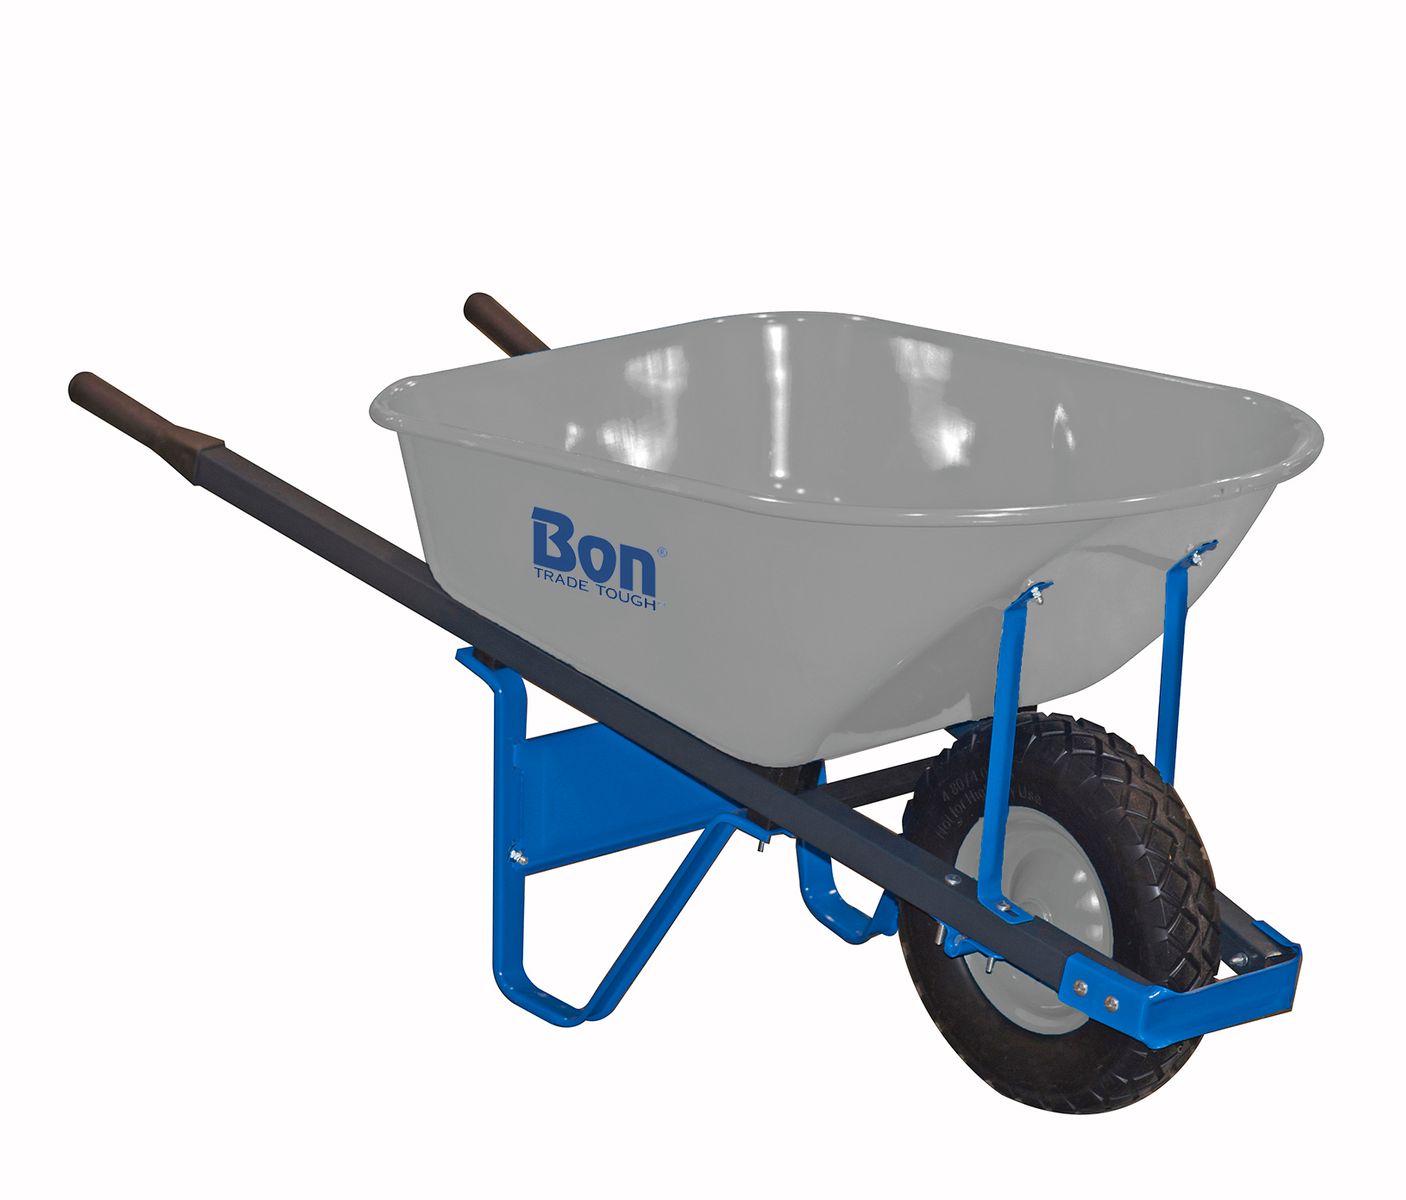 Specify part #84-974 when inquiring about Bons new Trade Tough Steel Tray Wheelbarrow.